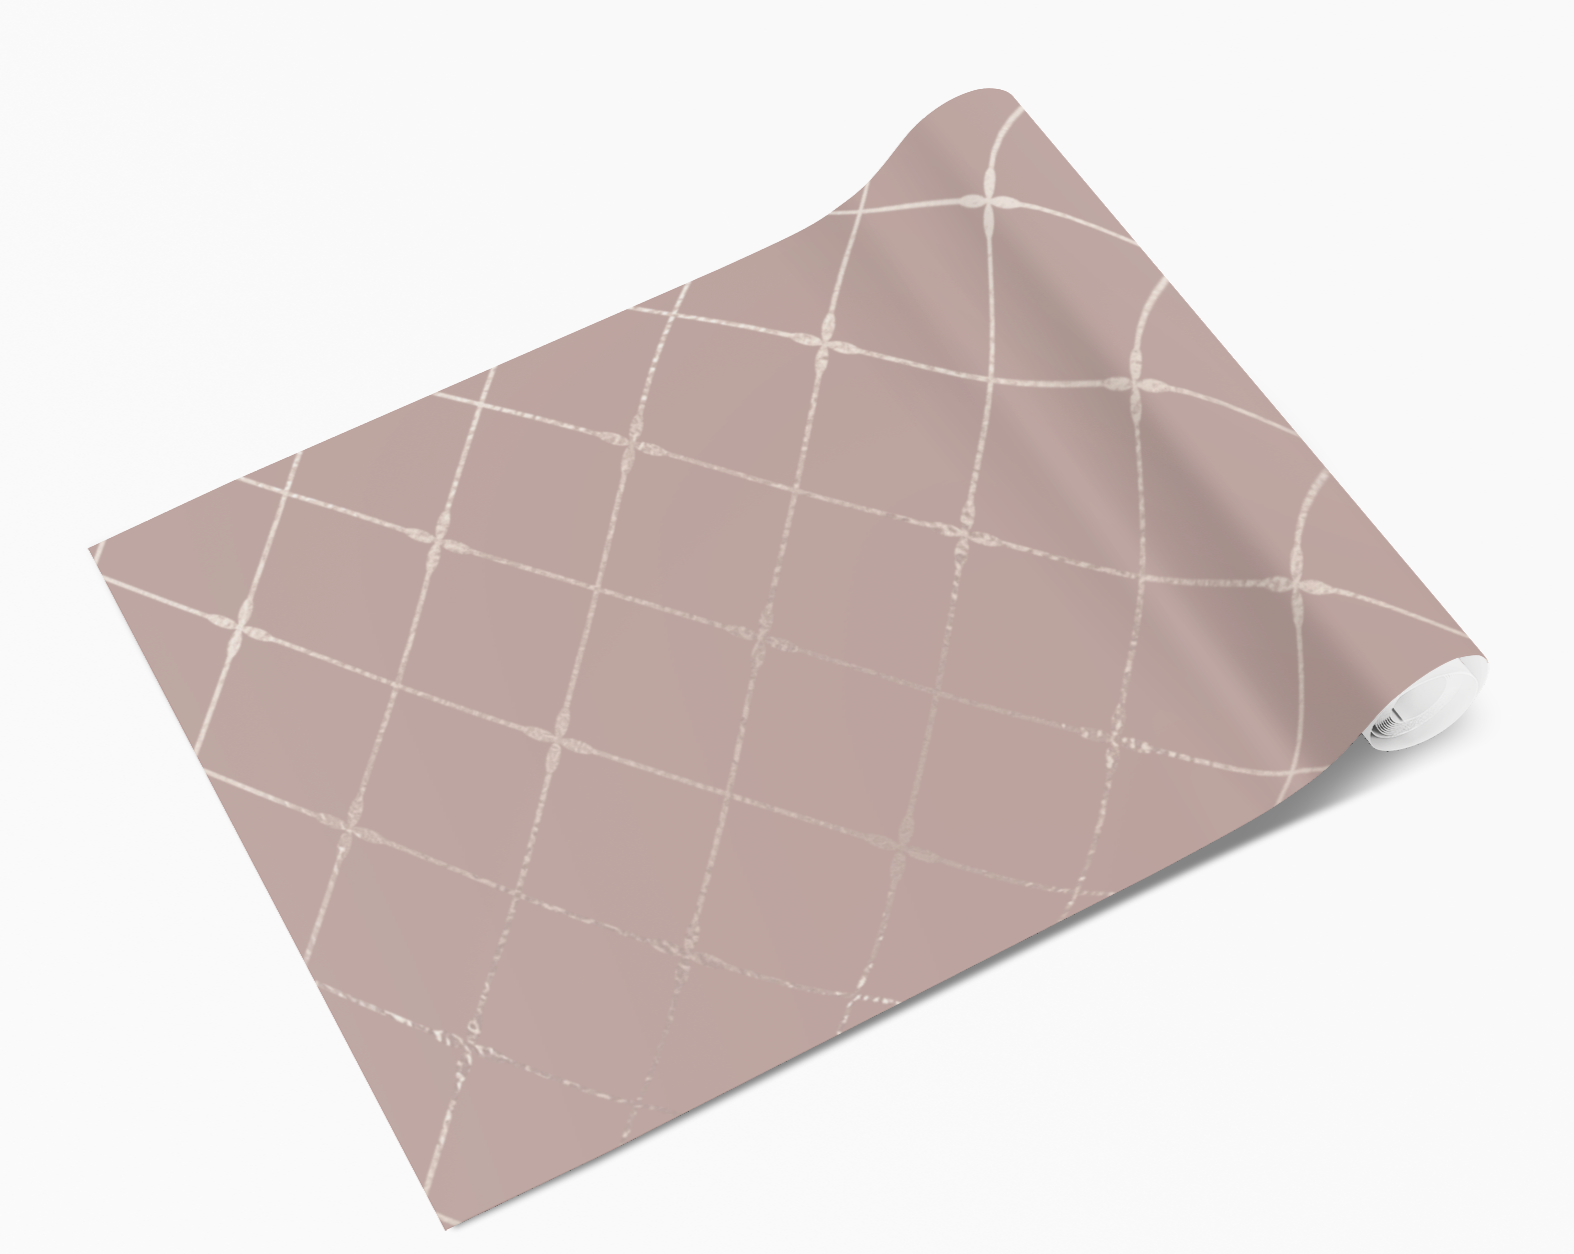 Rosy Pink Diamond Criss Cross Vinyl Furniture Wrap